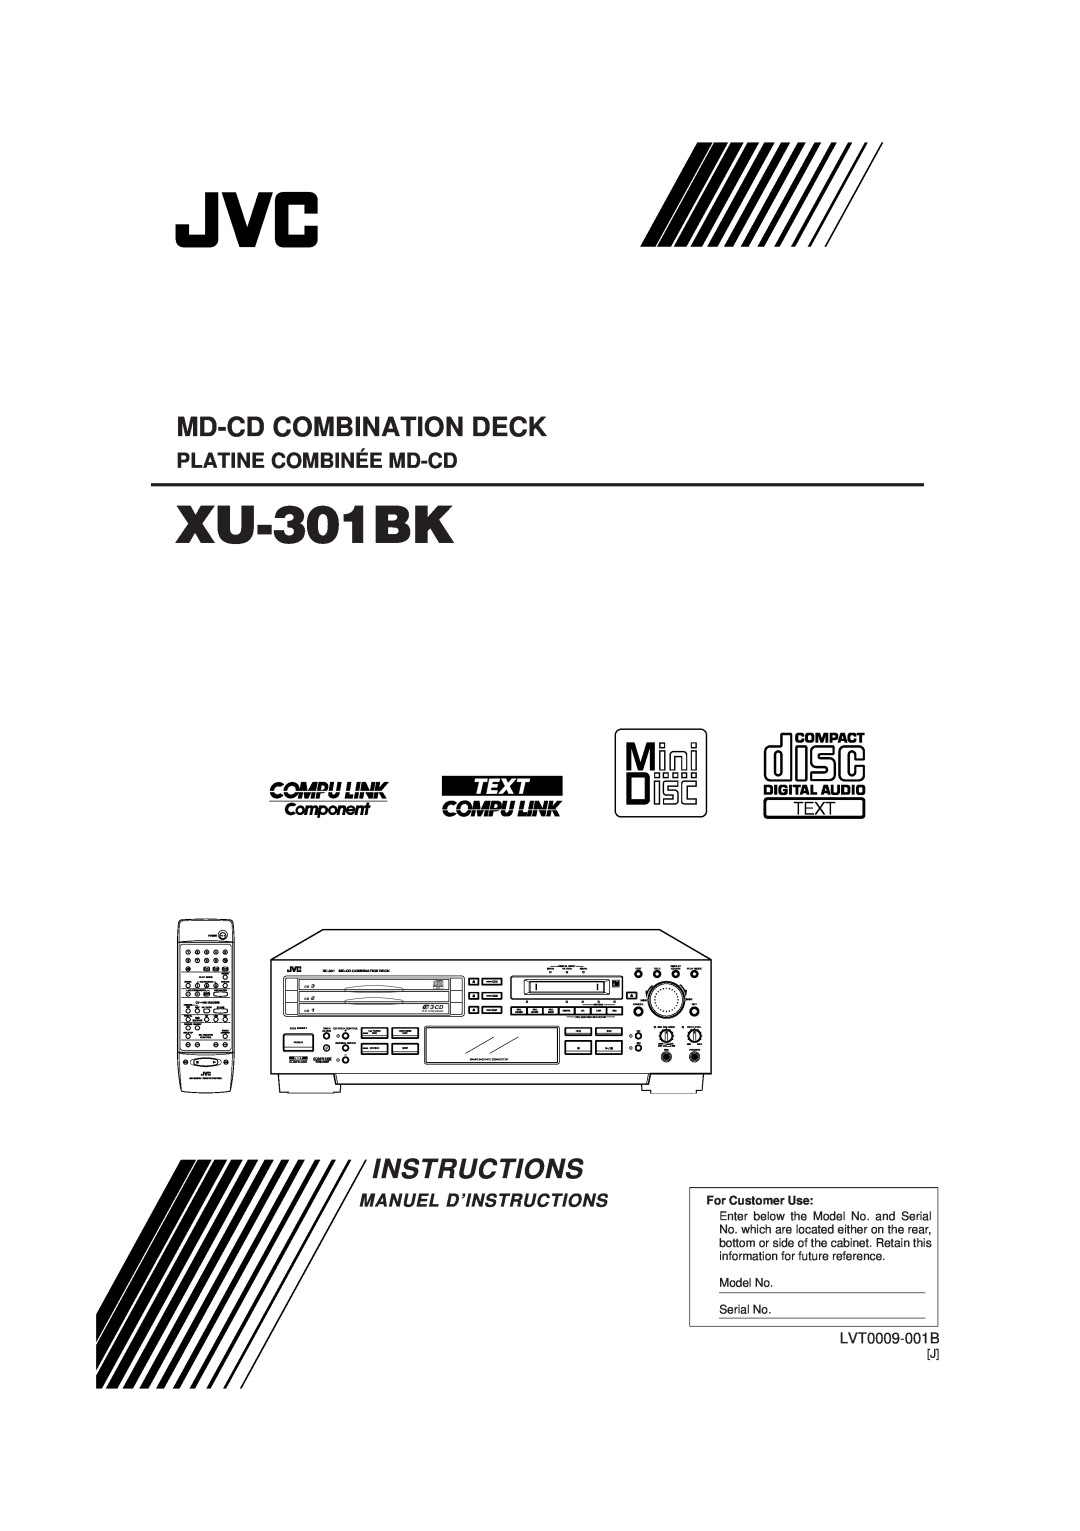 JVC manual Md-Cdcombination Deck, Platine Combinée Md-Cd, Manuel D’Instructions, XU-301BK, LVT0009-001B, 3-CD 